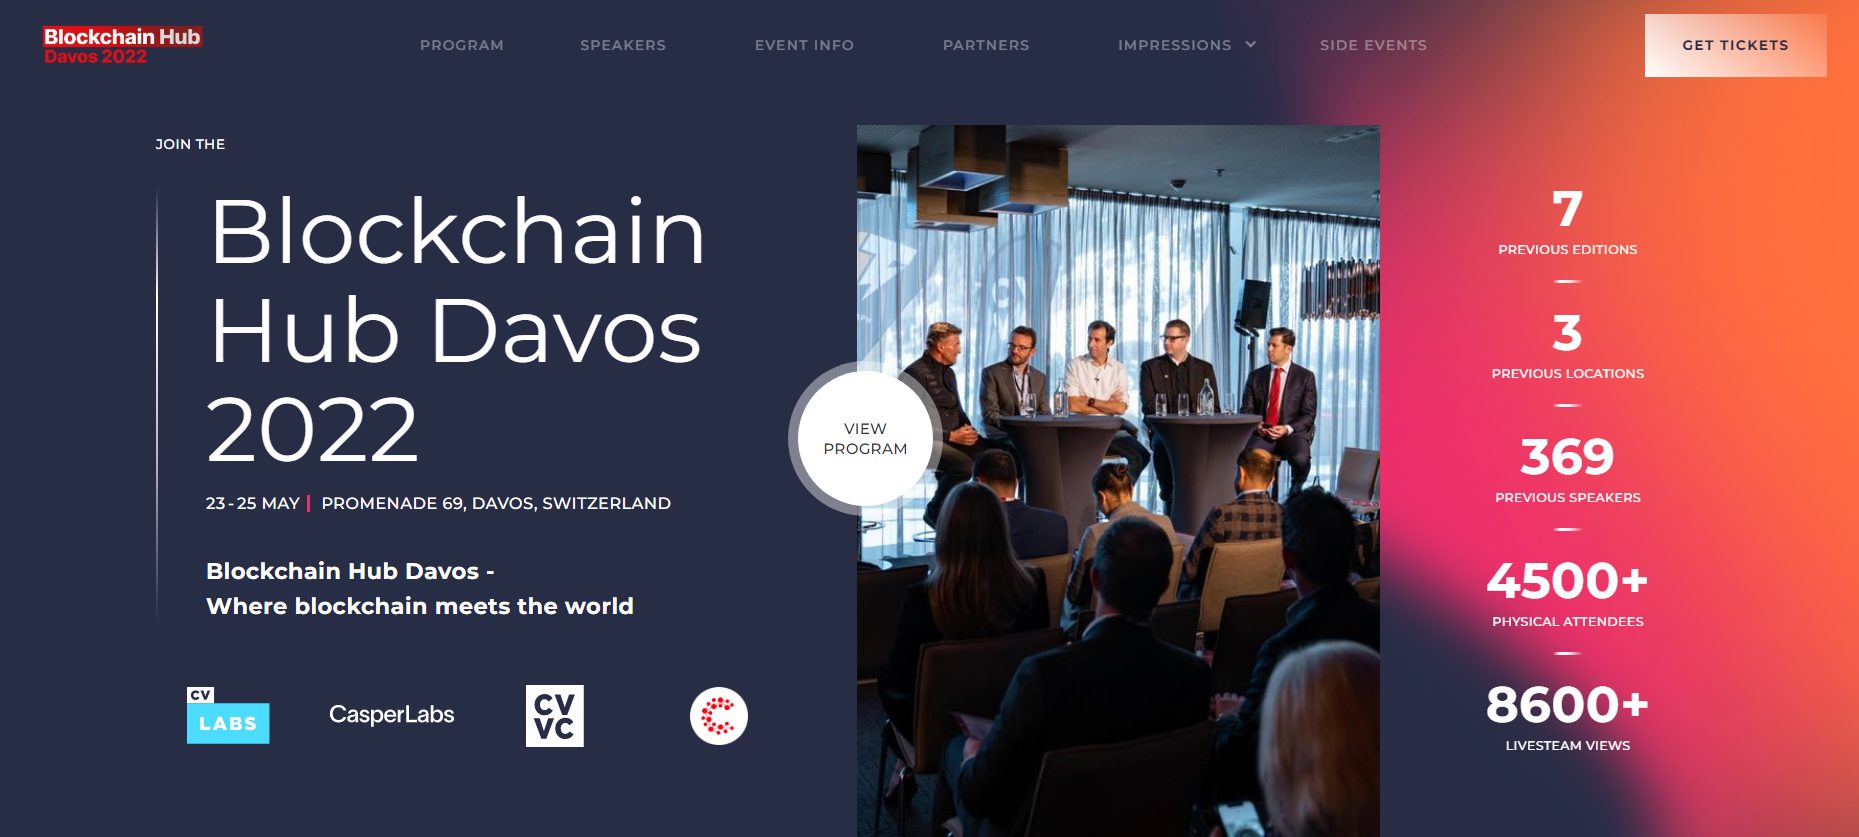 Blockchain Hub Davos 2022